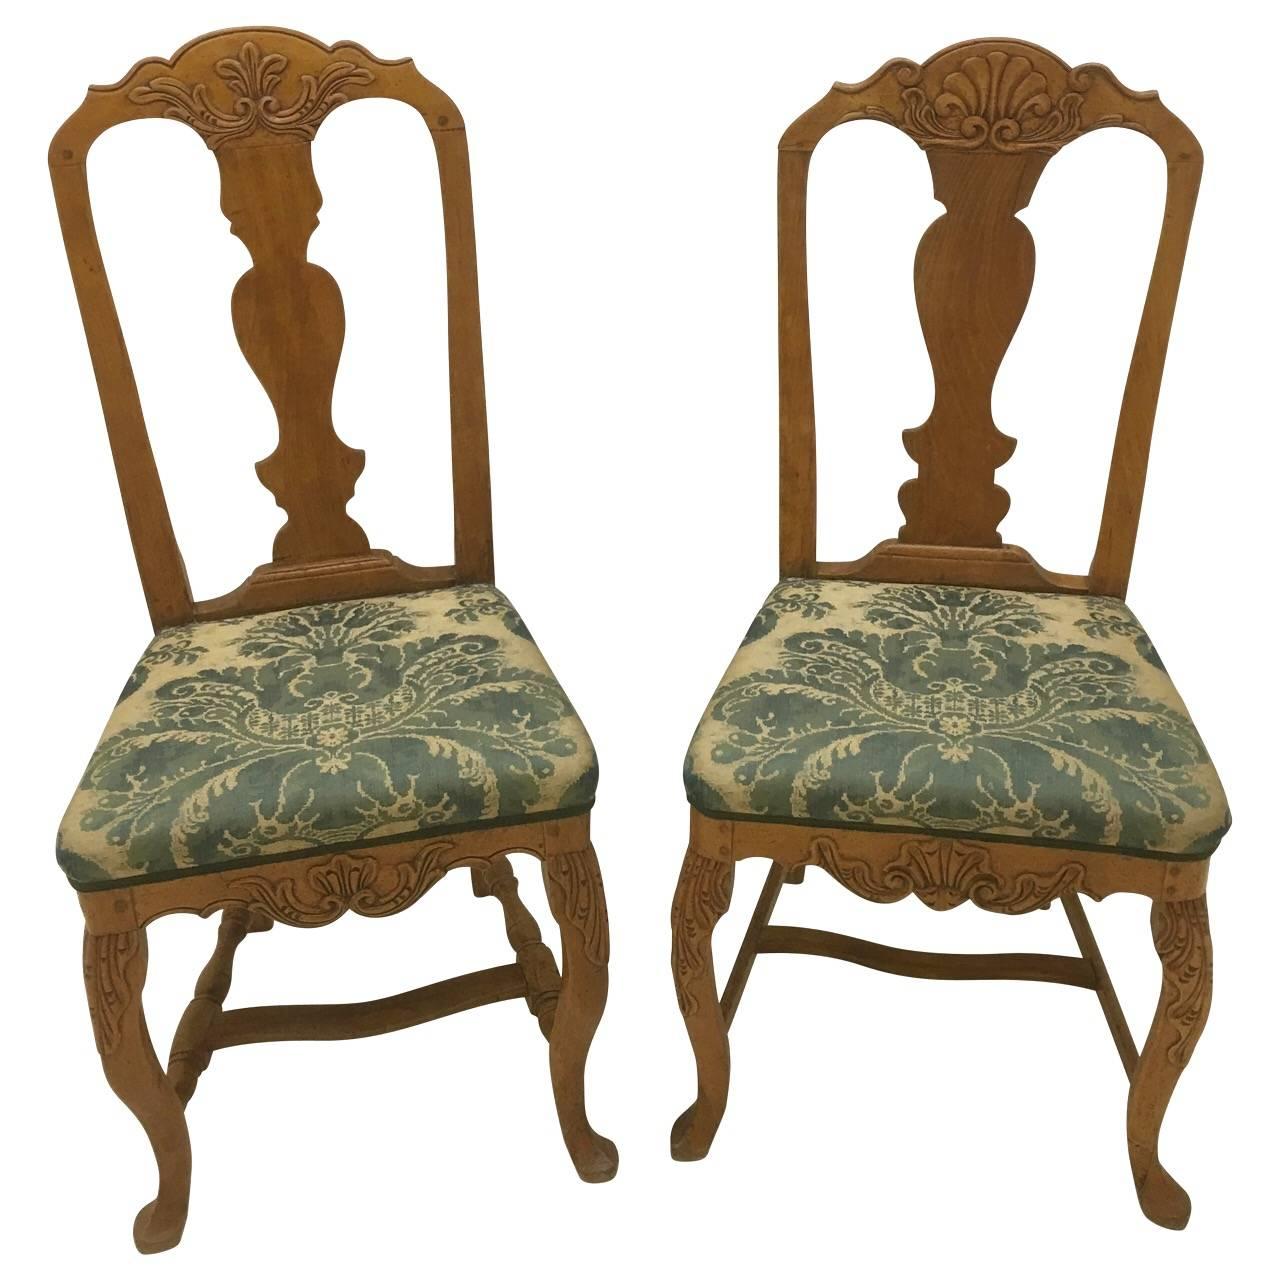 Tolles Paar originaler Rokokostühle aus dem 18. Jahrhundert.